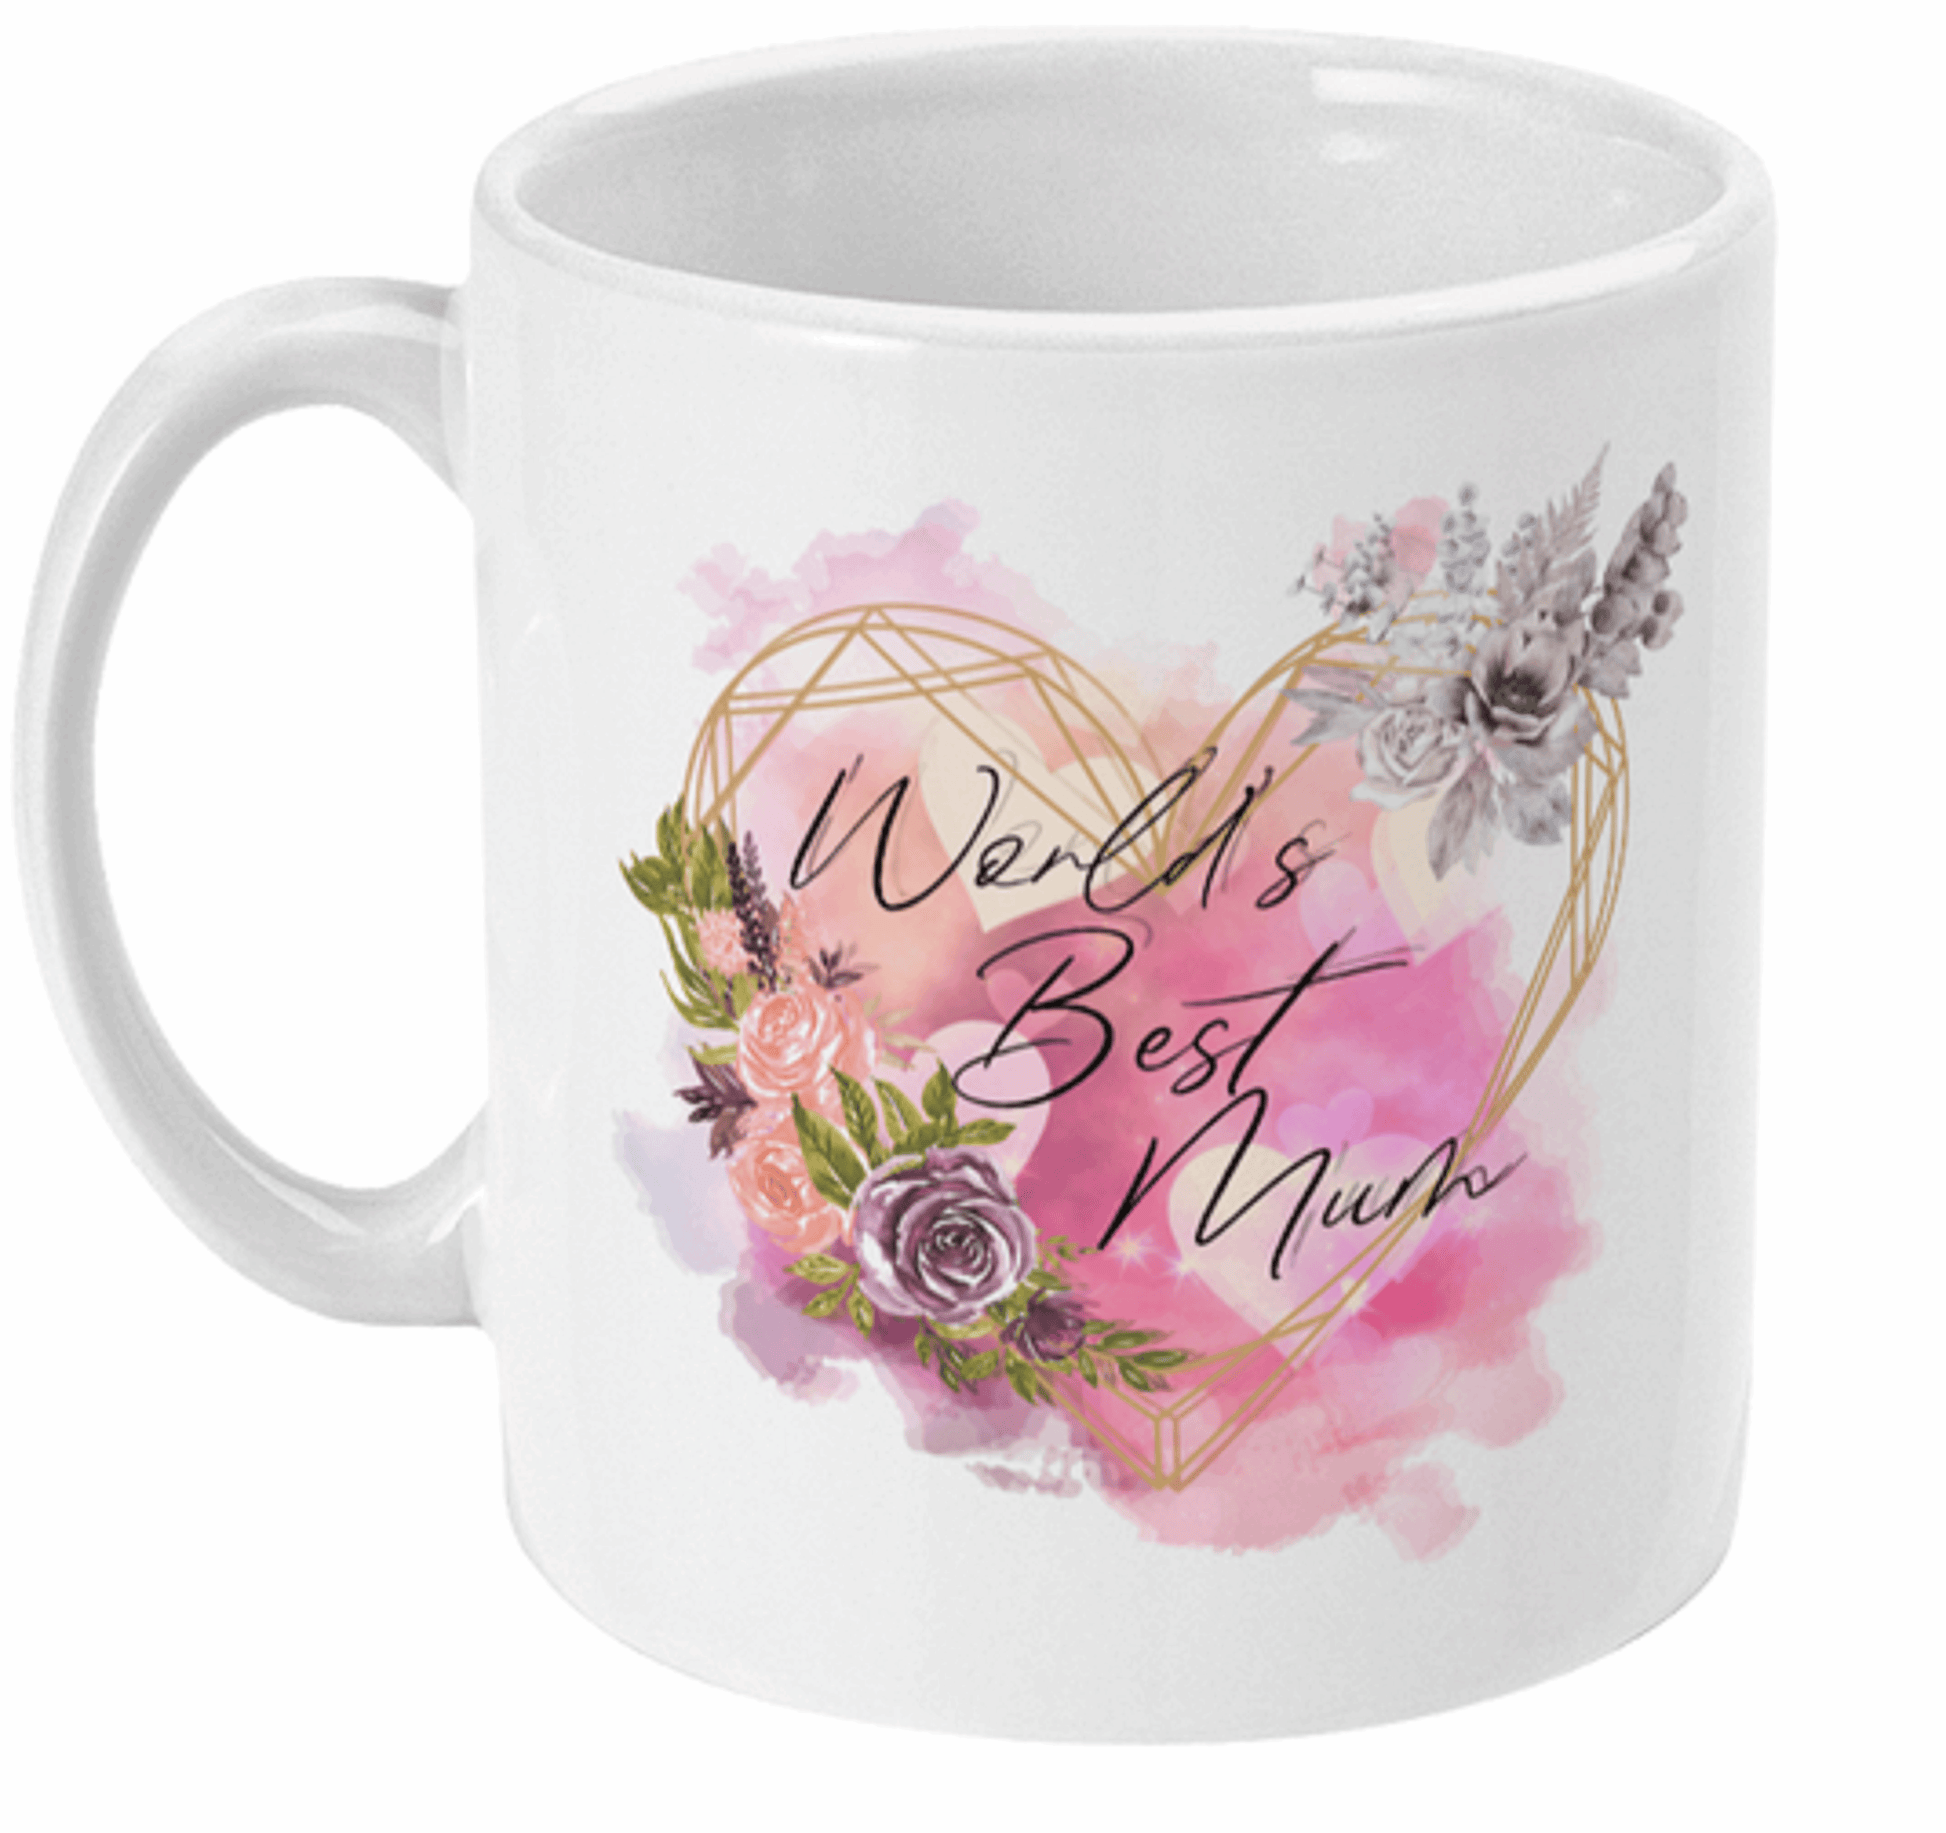  Lovely Worlds Best Mum Coffee Mug by Free Spirit Accessories sold by Free Spirit Accessories